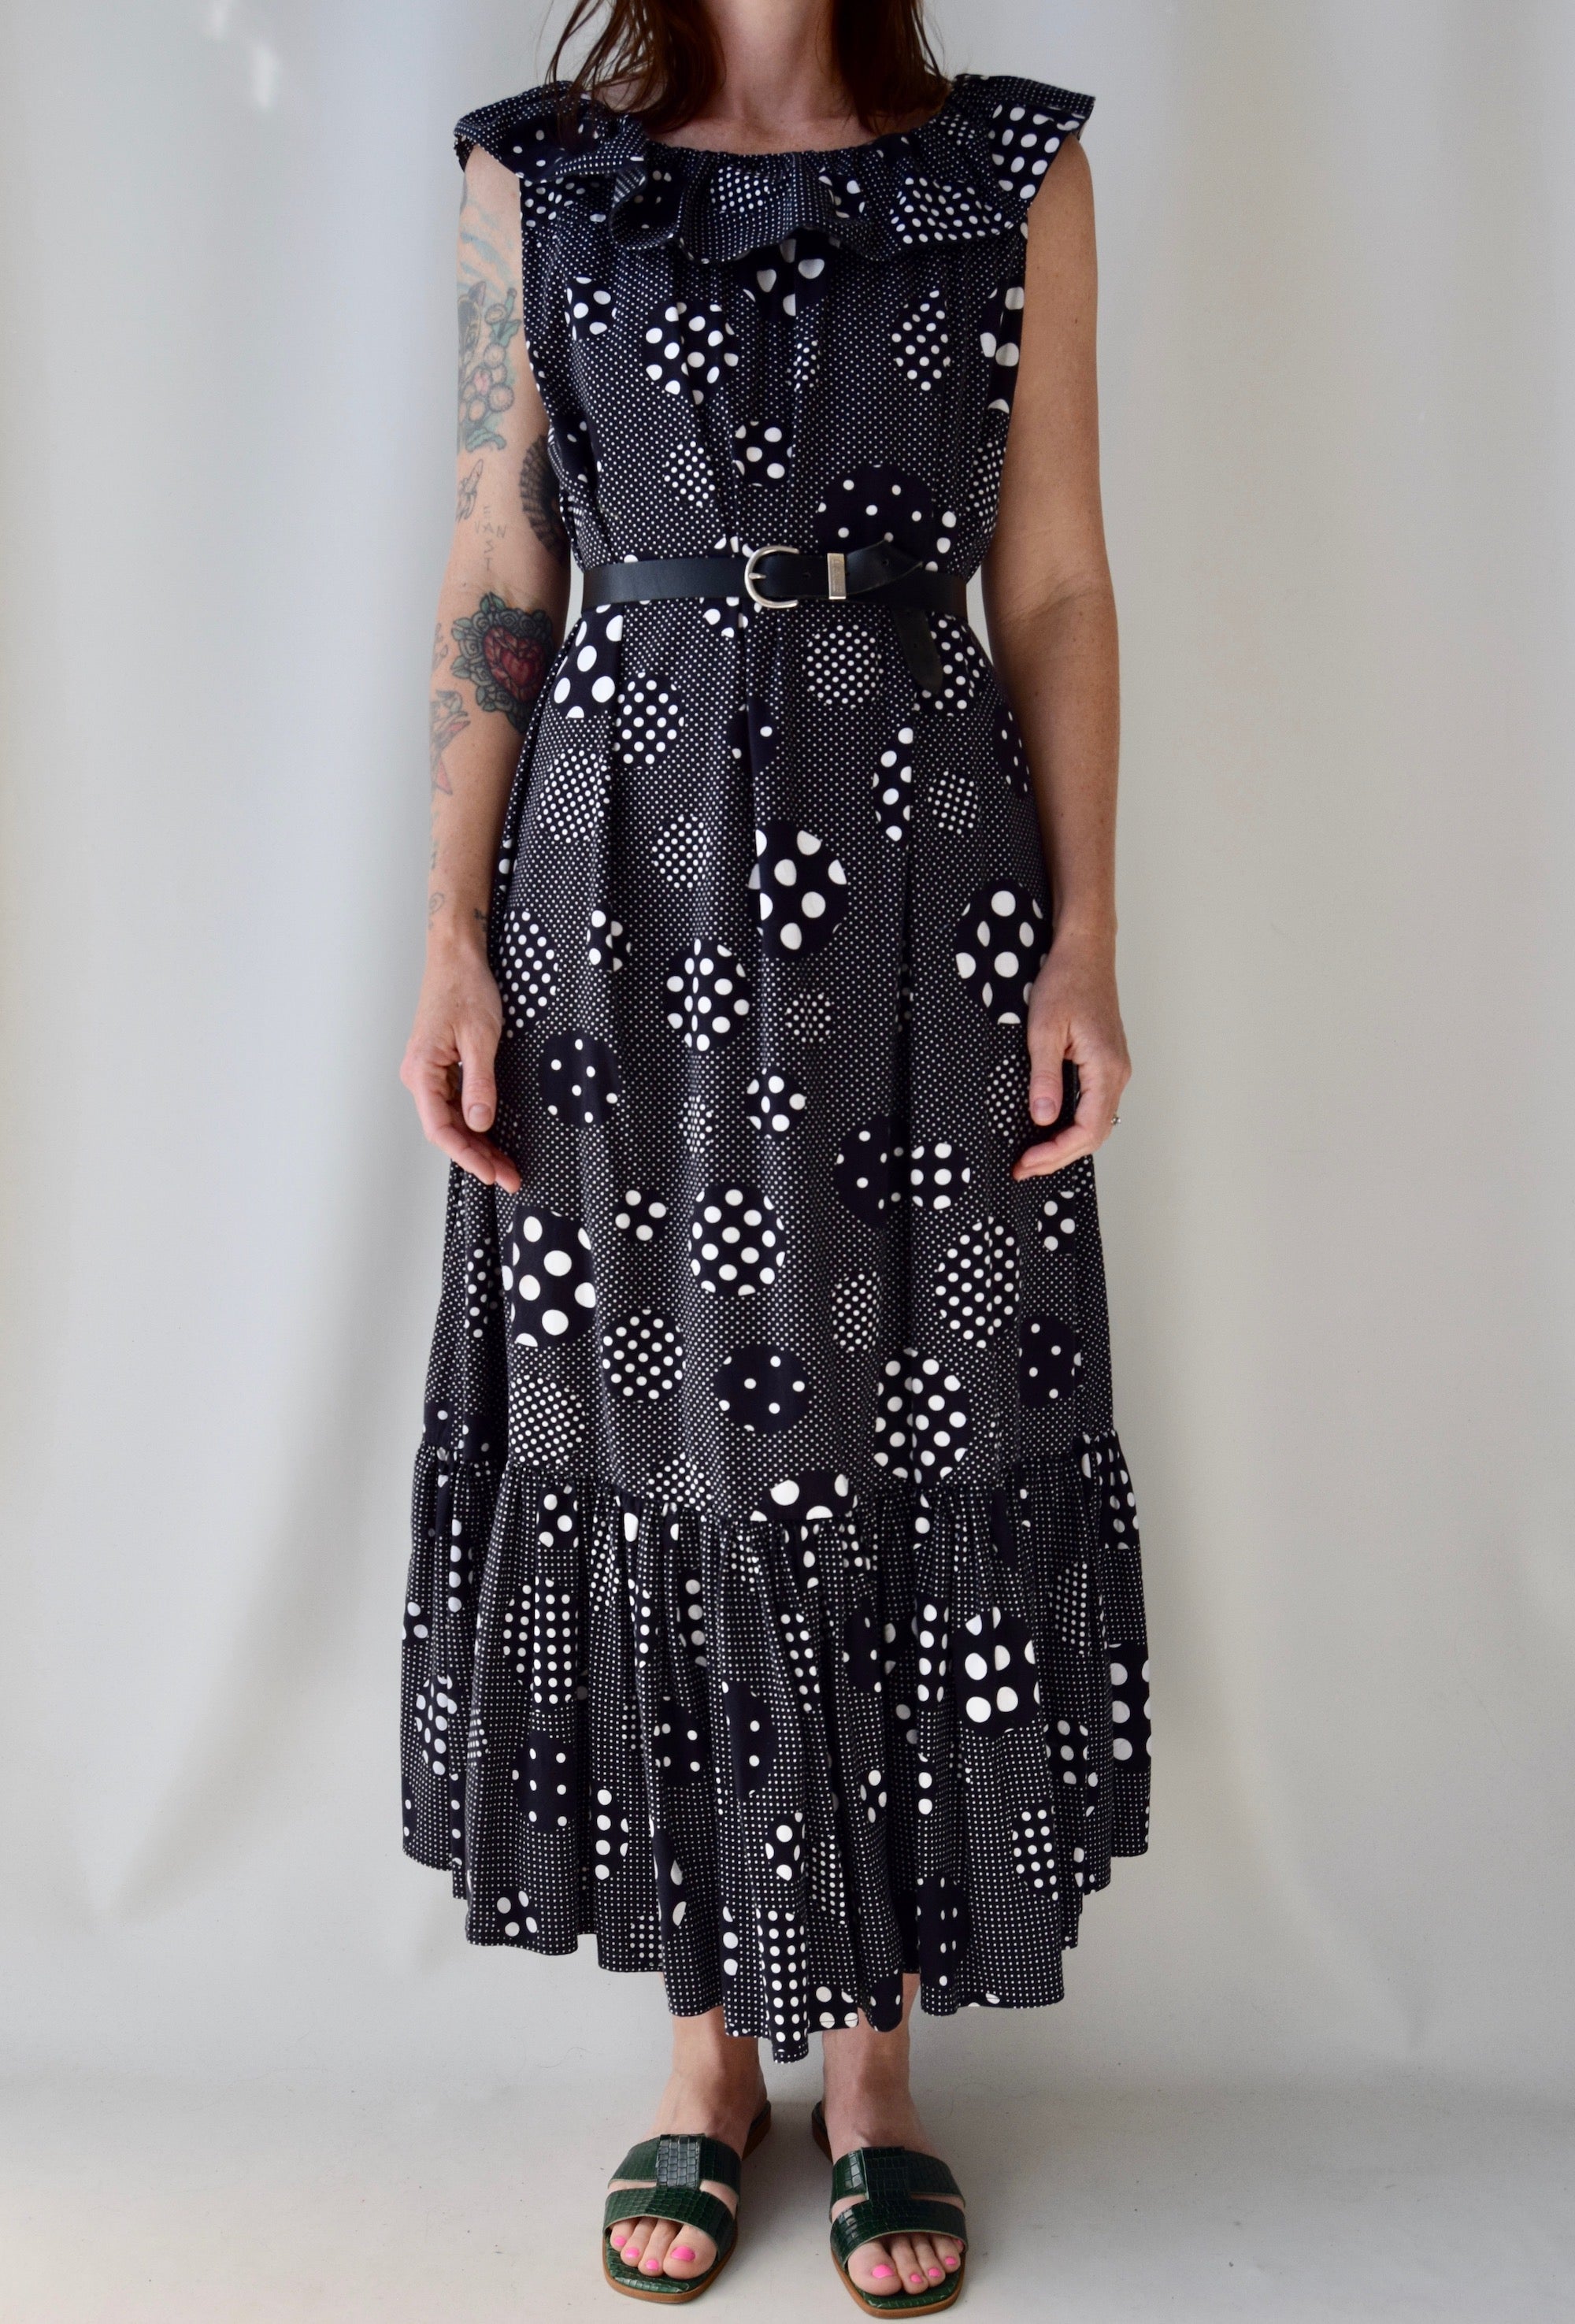 Black and White Polka Dot Ruffle Maxi Dress